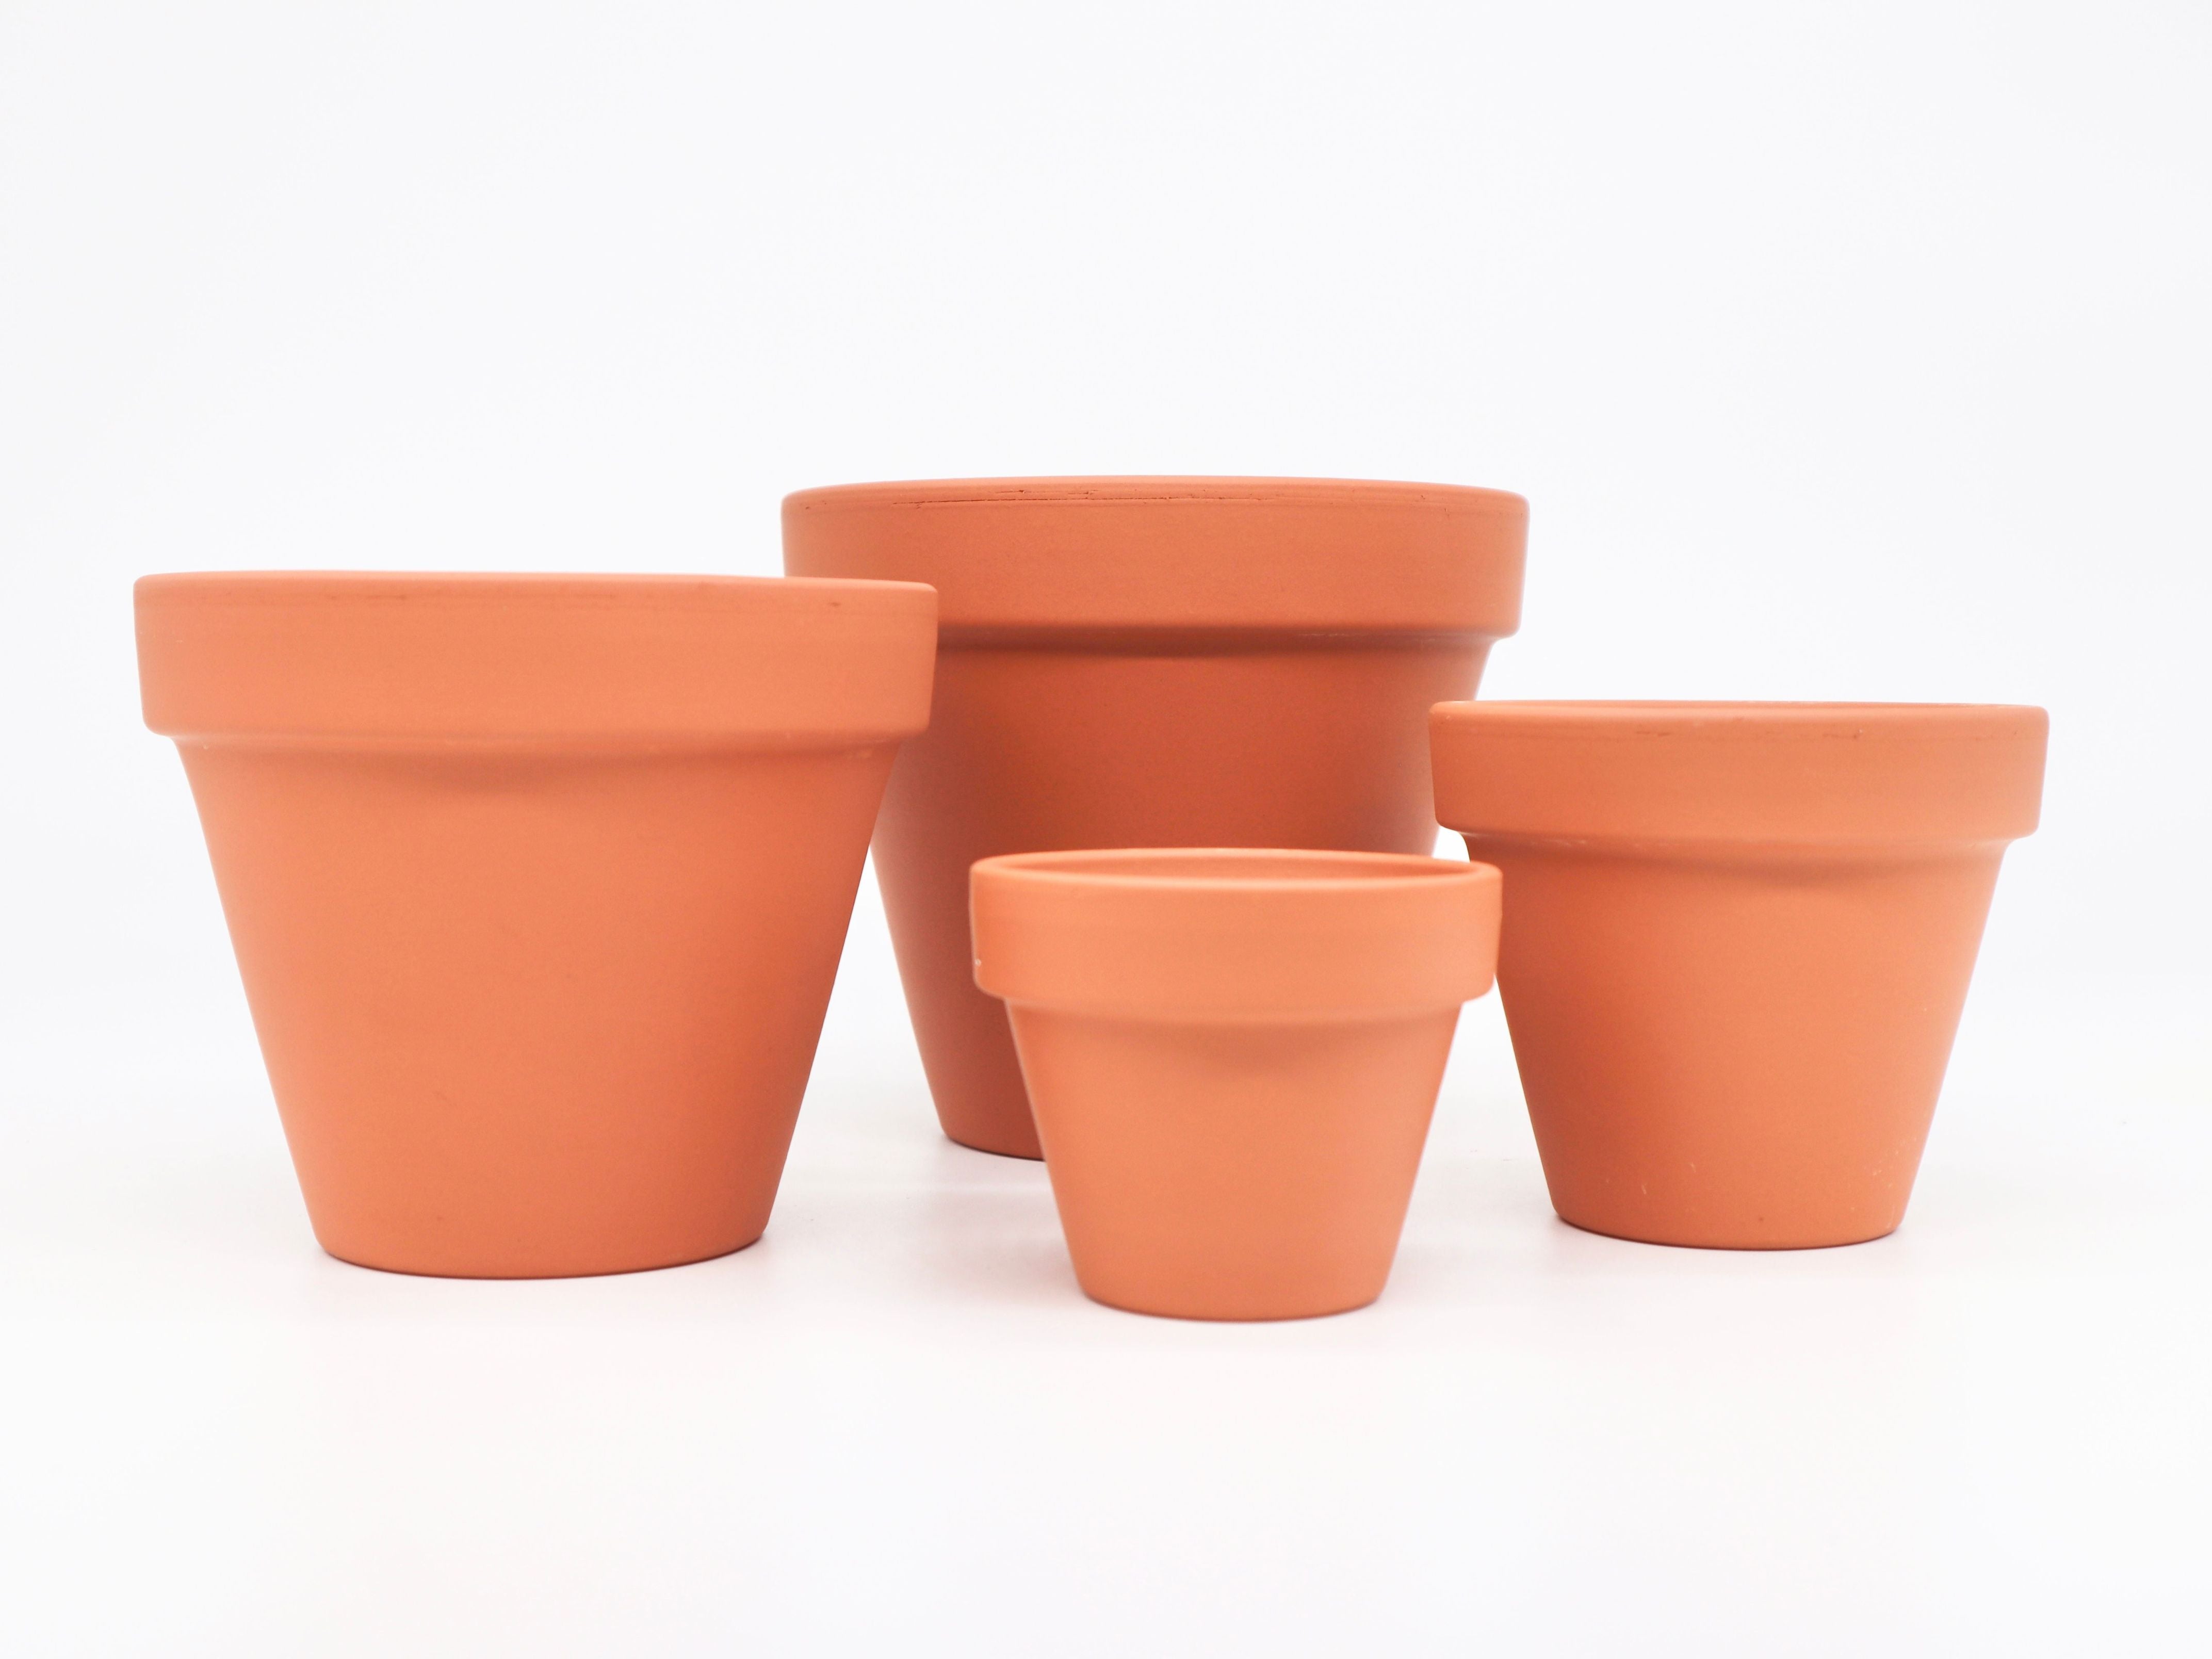 Mini Terracotta Pots 1 - 50 pcs - Extra Small, Small, Medium, Large & Extra Large Plant Pots